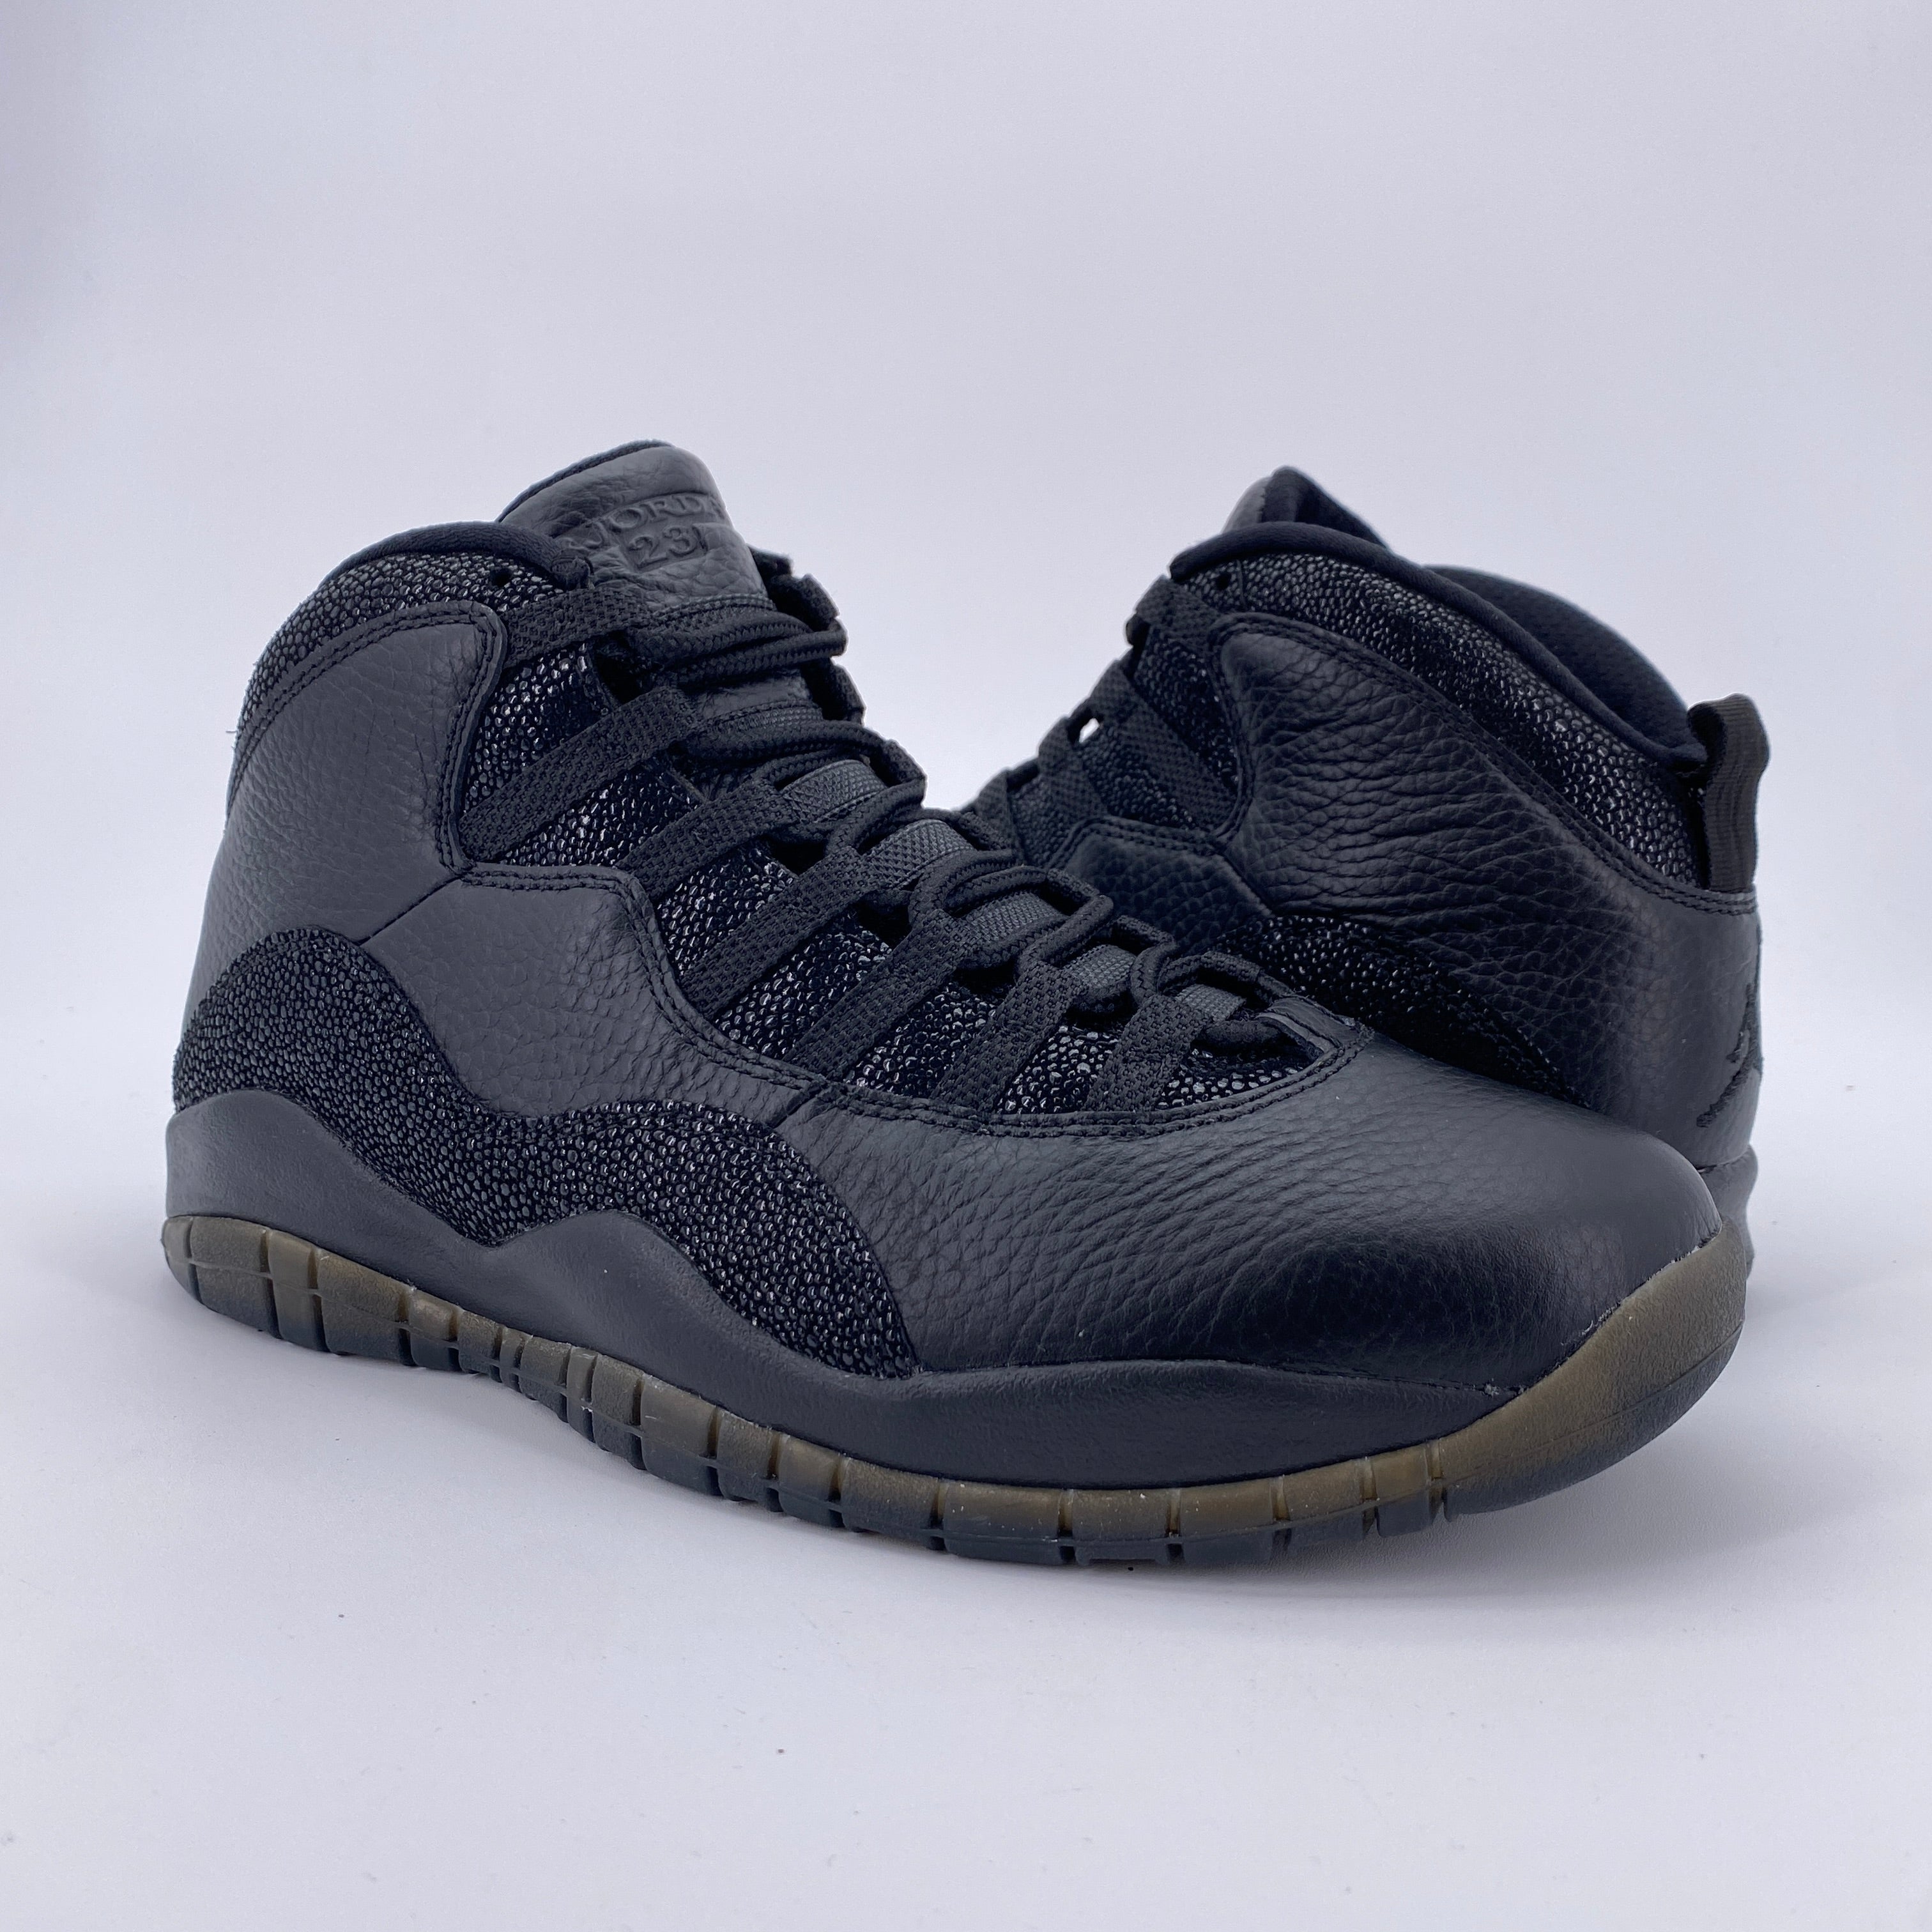 Air Jordan 10 Retro Ovo Black 2016 Size 8.5 – SOLED OUT JC